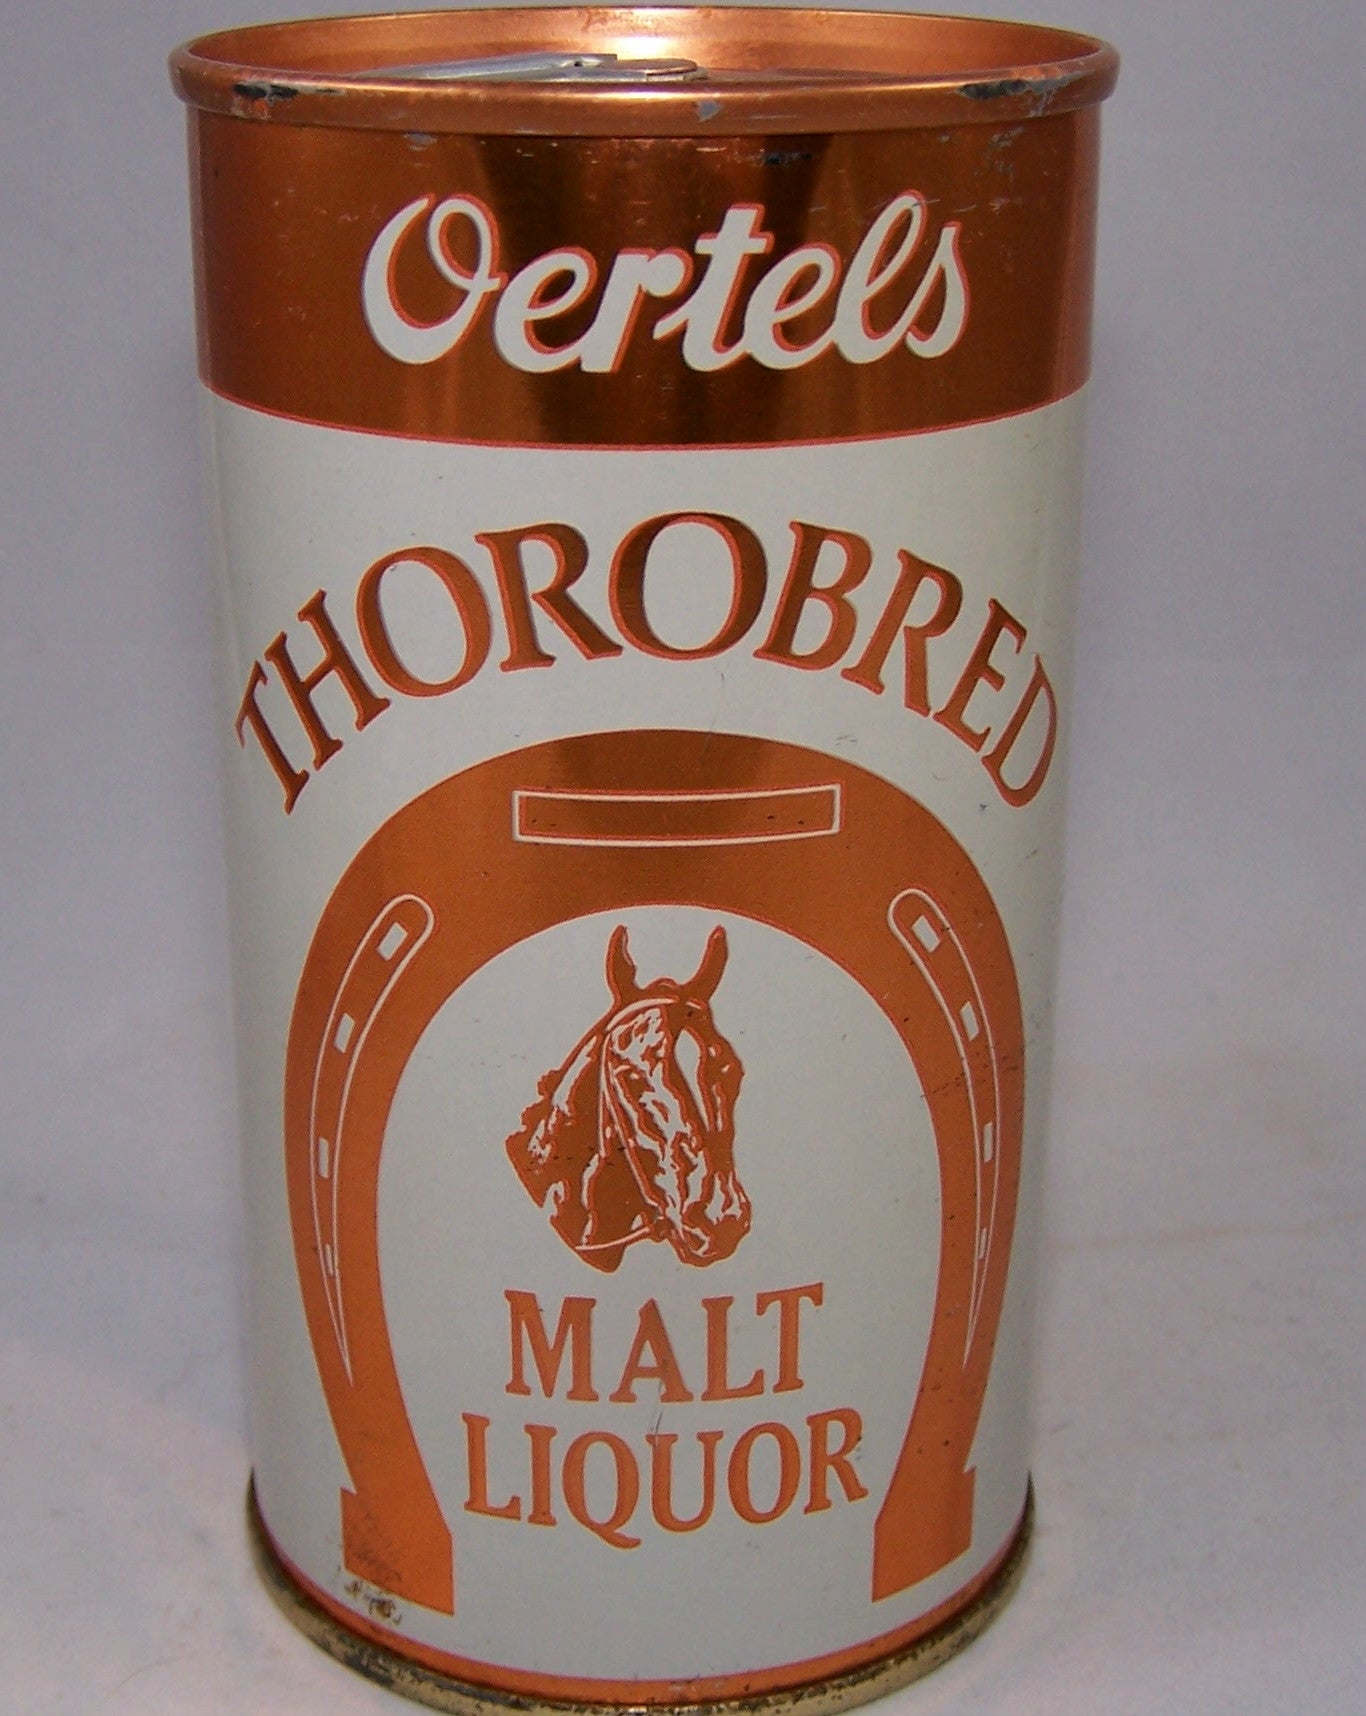 Oertels Thorobred Malt Liquor, USBC II 99-7, Grade 1/1 + sold on 10/10/15